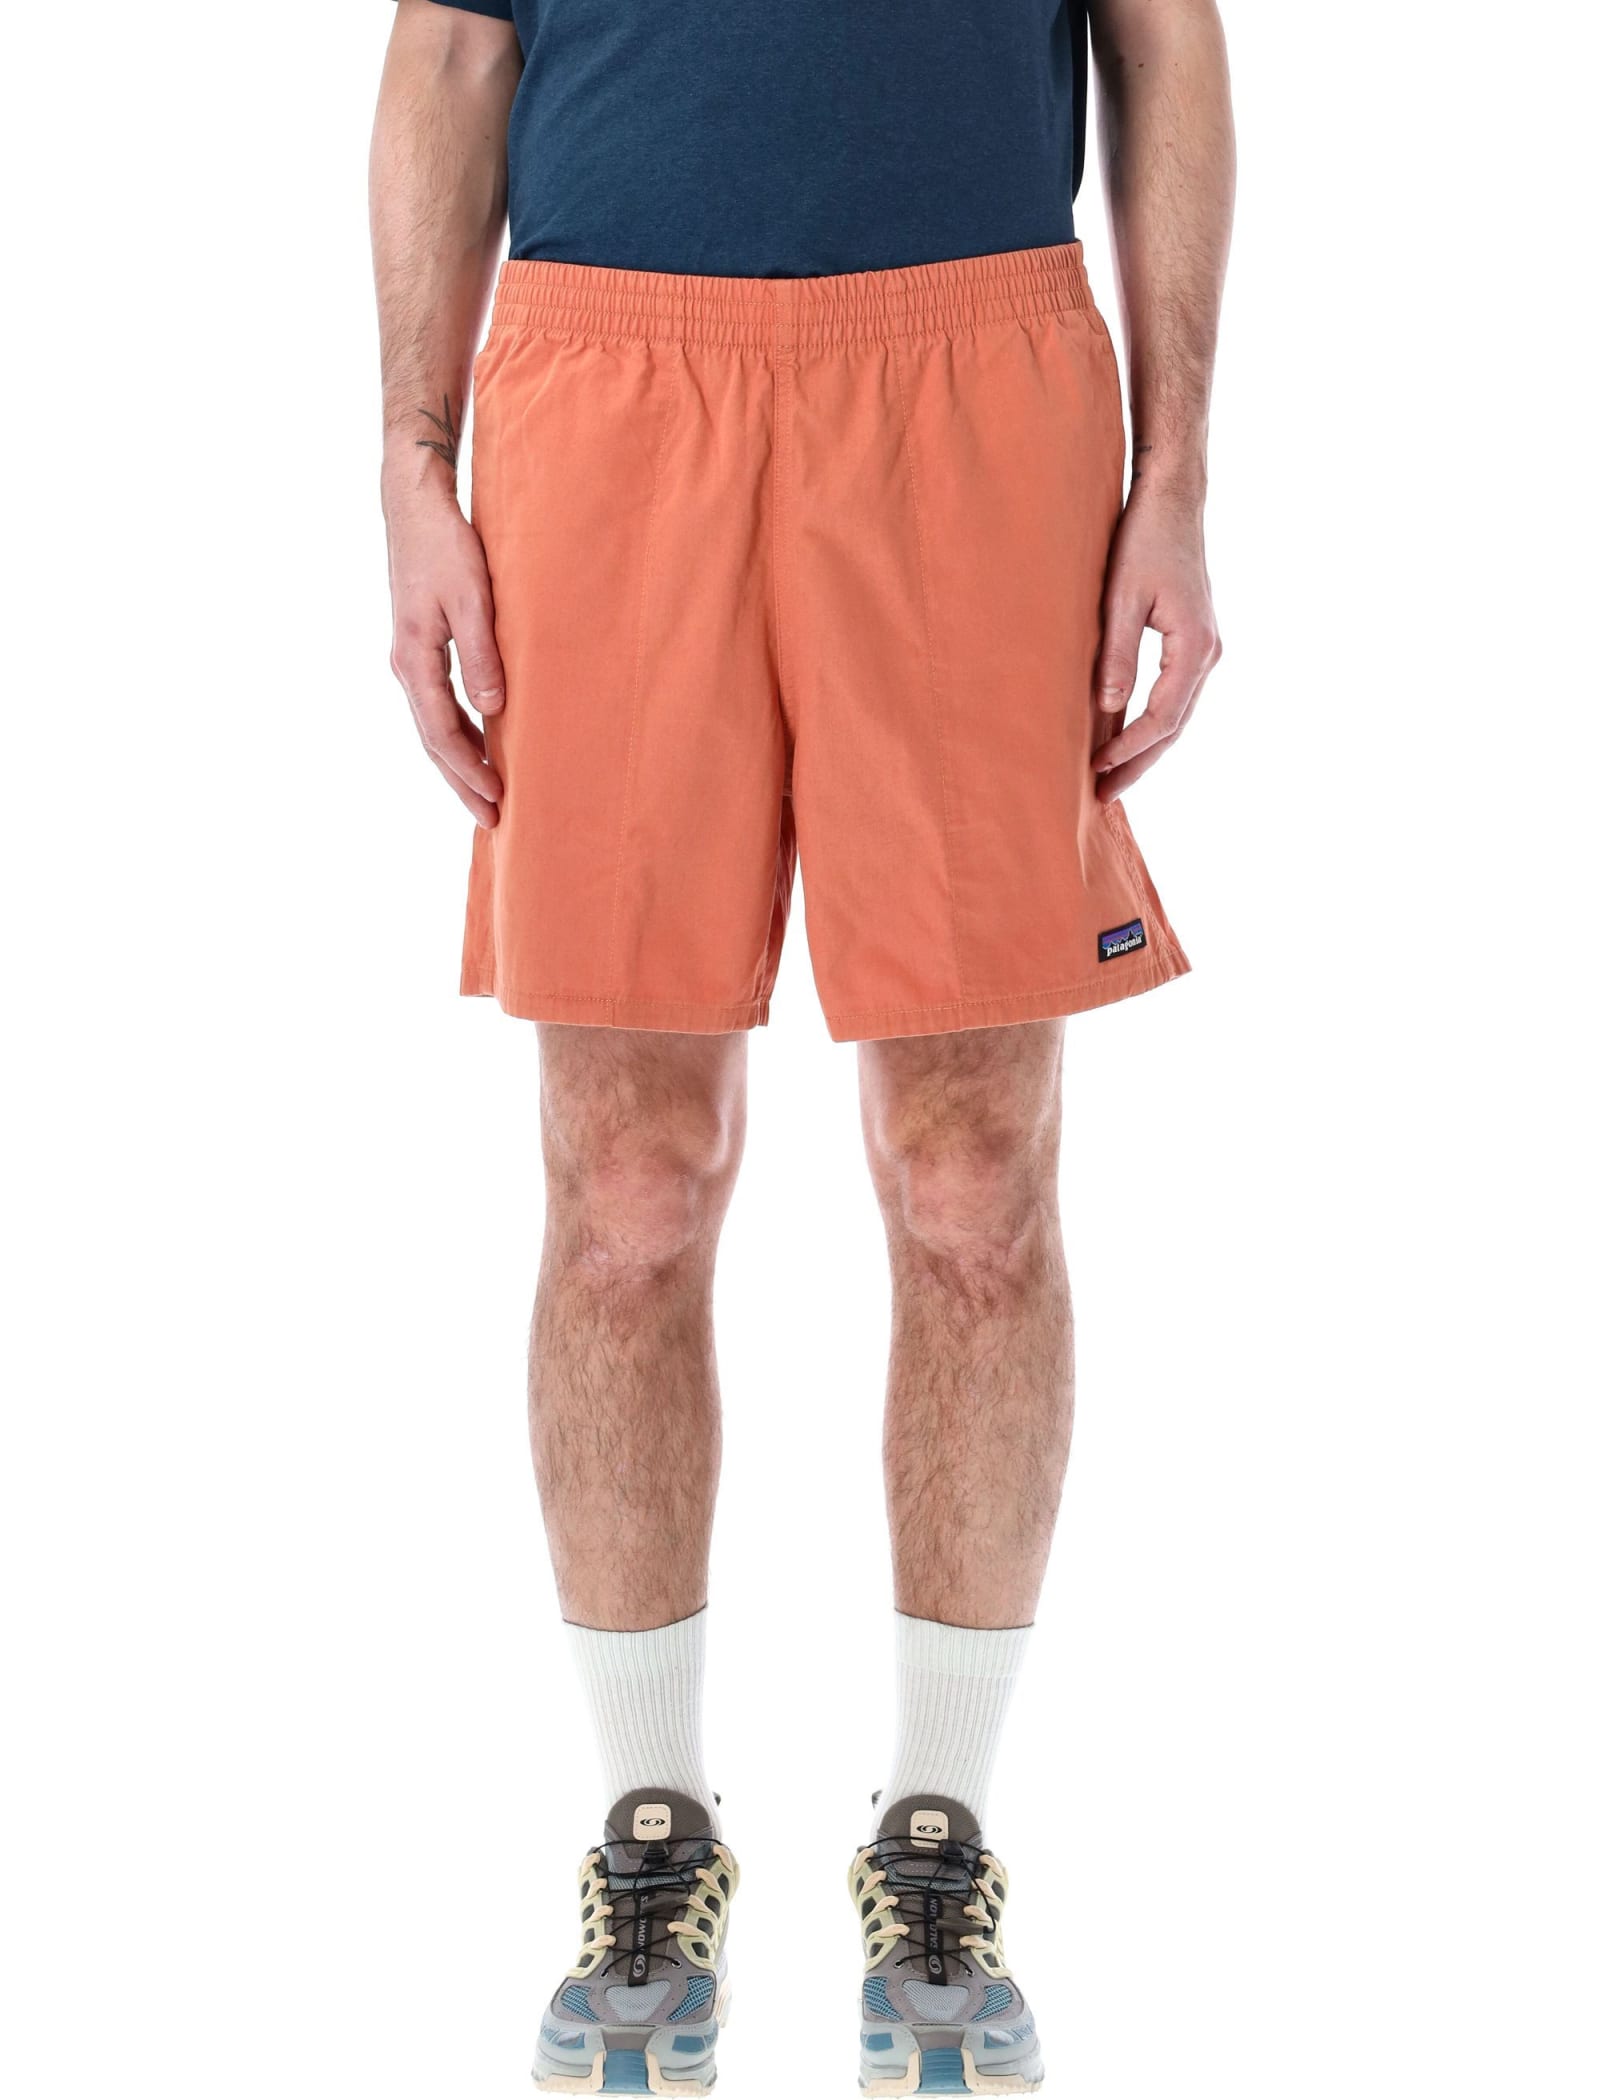 Funhoggers Shorts - 6